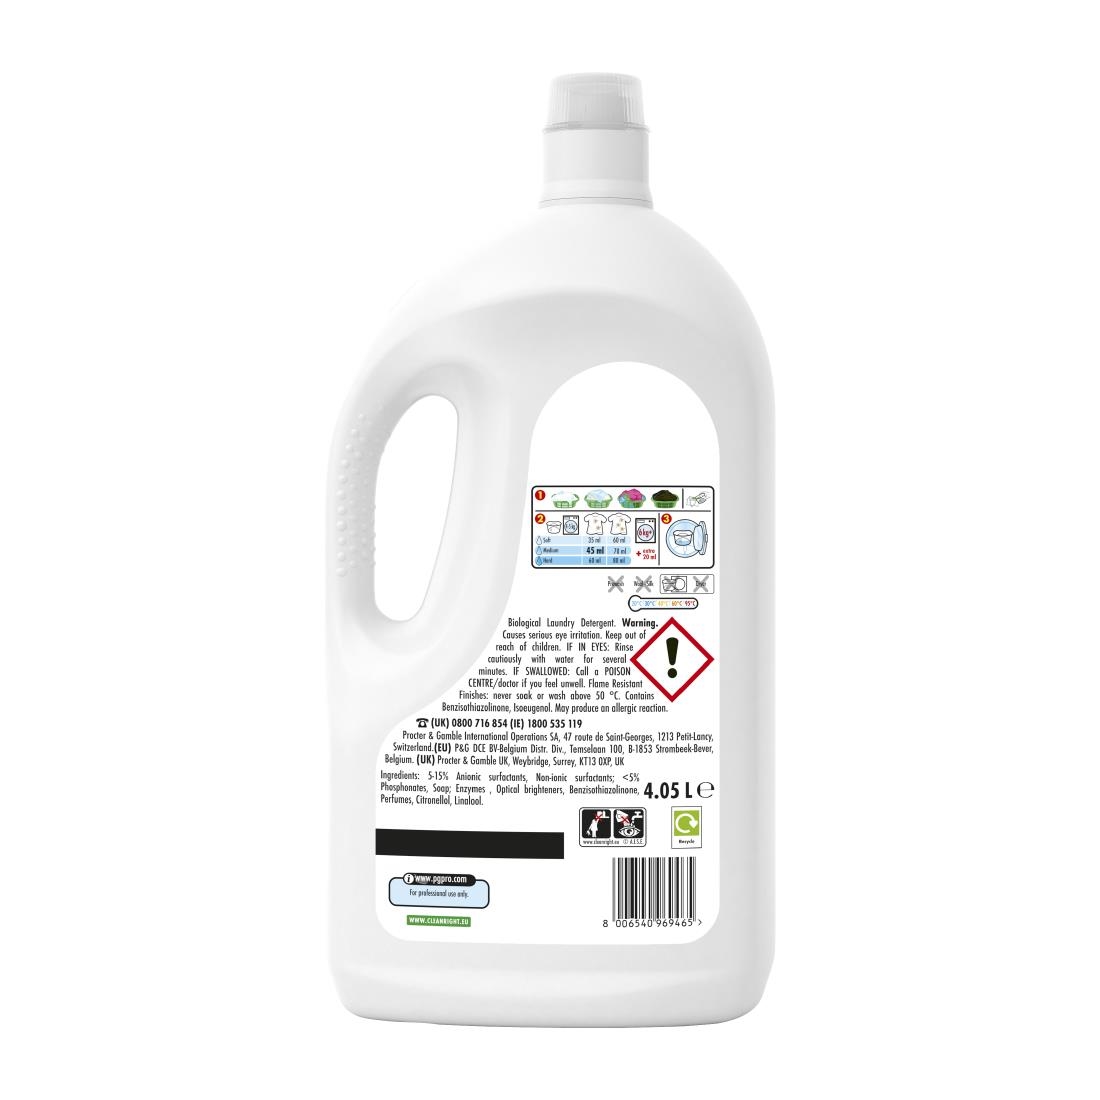 Ariel Professional Washing Liquid Laundry Detergent Regular 4-05Ltr Pack of 2 (DZ456)